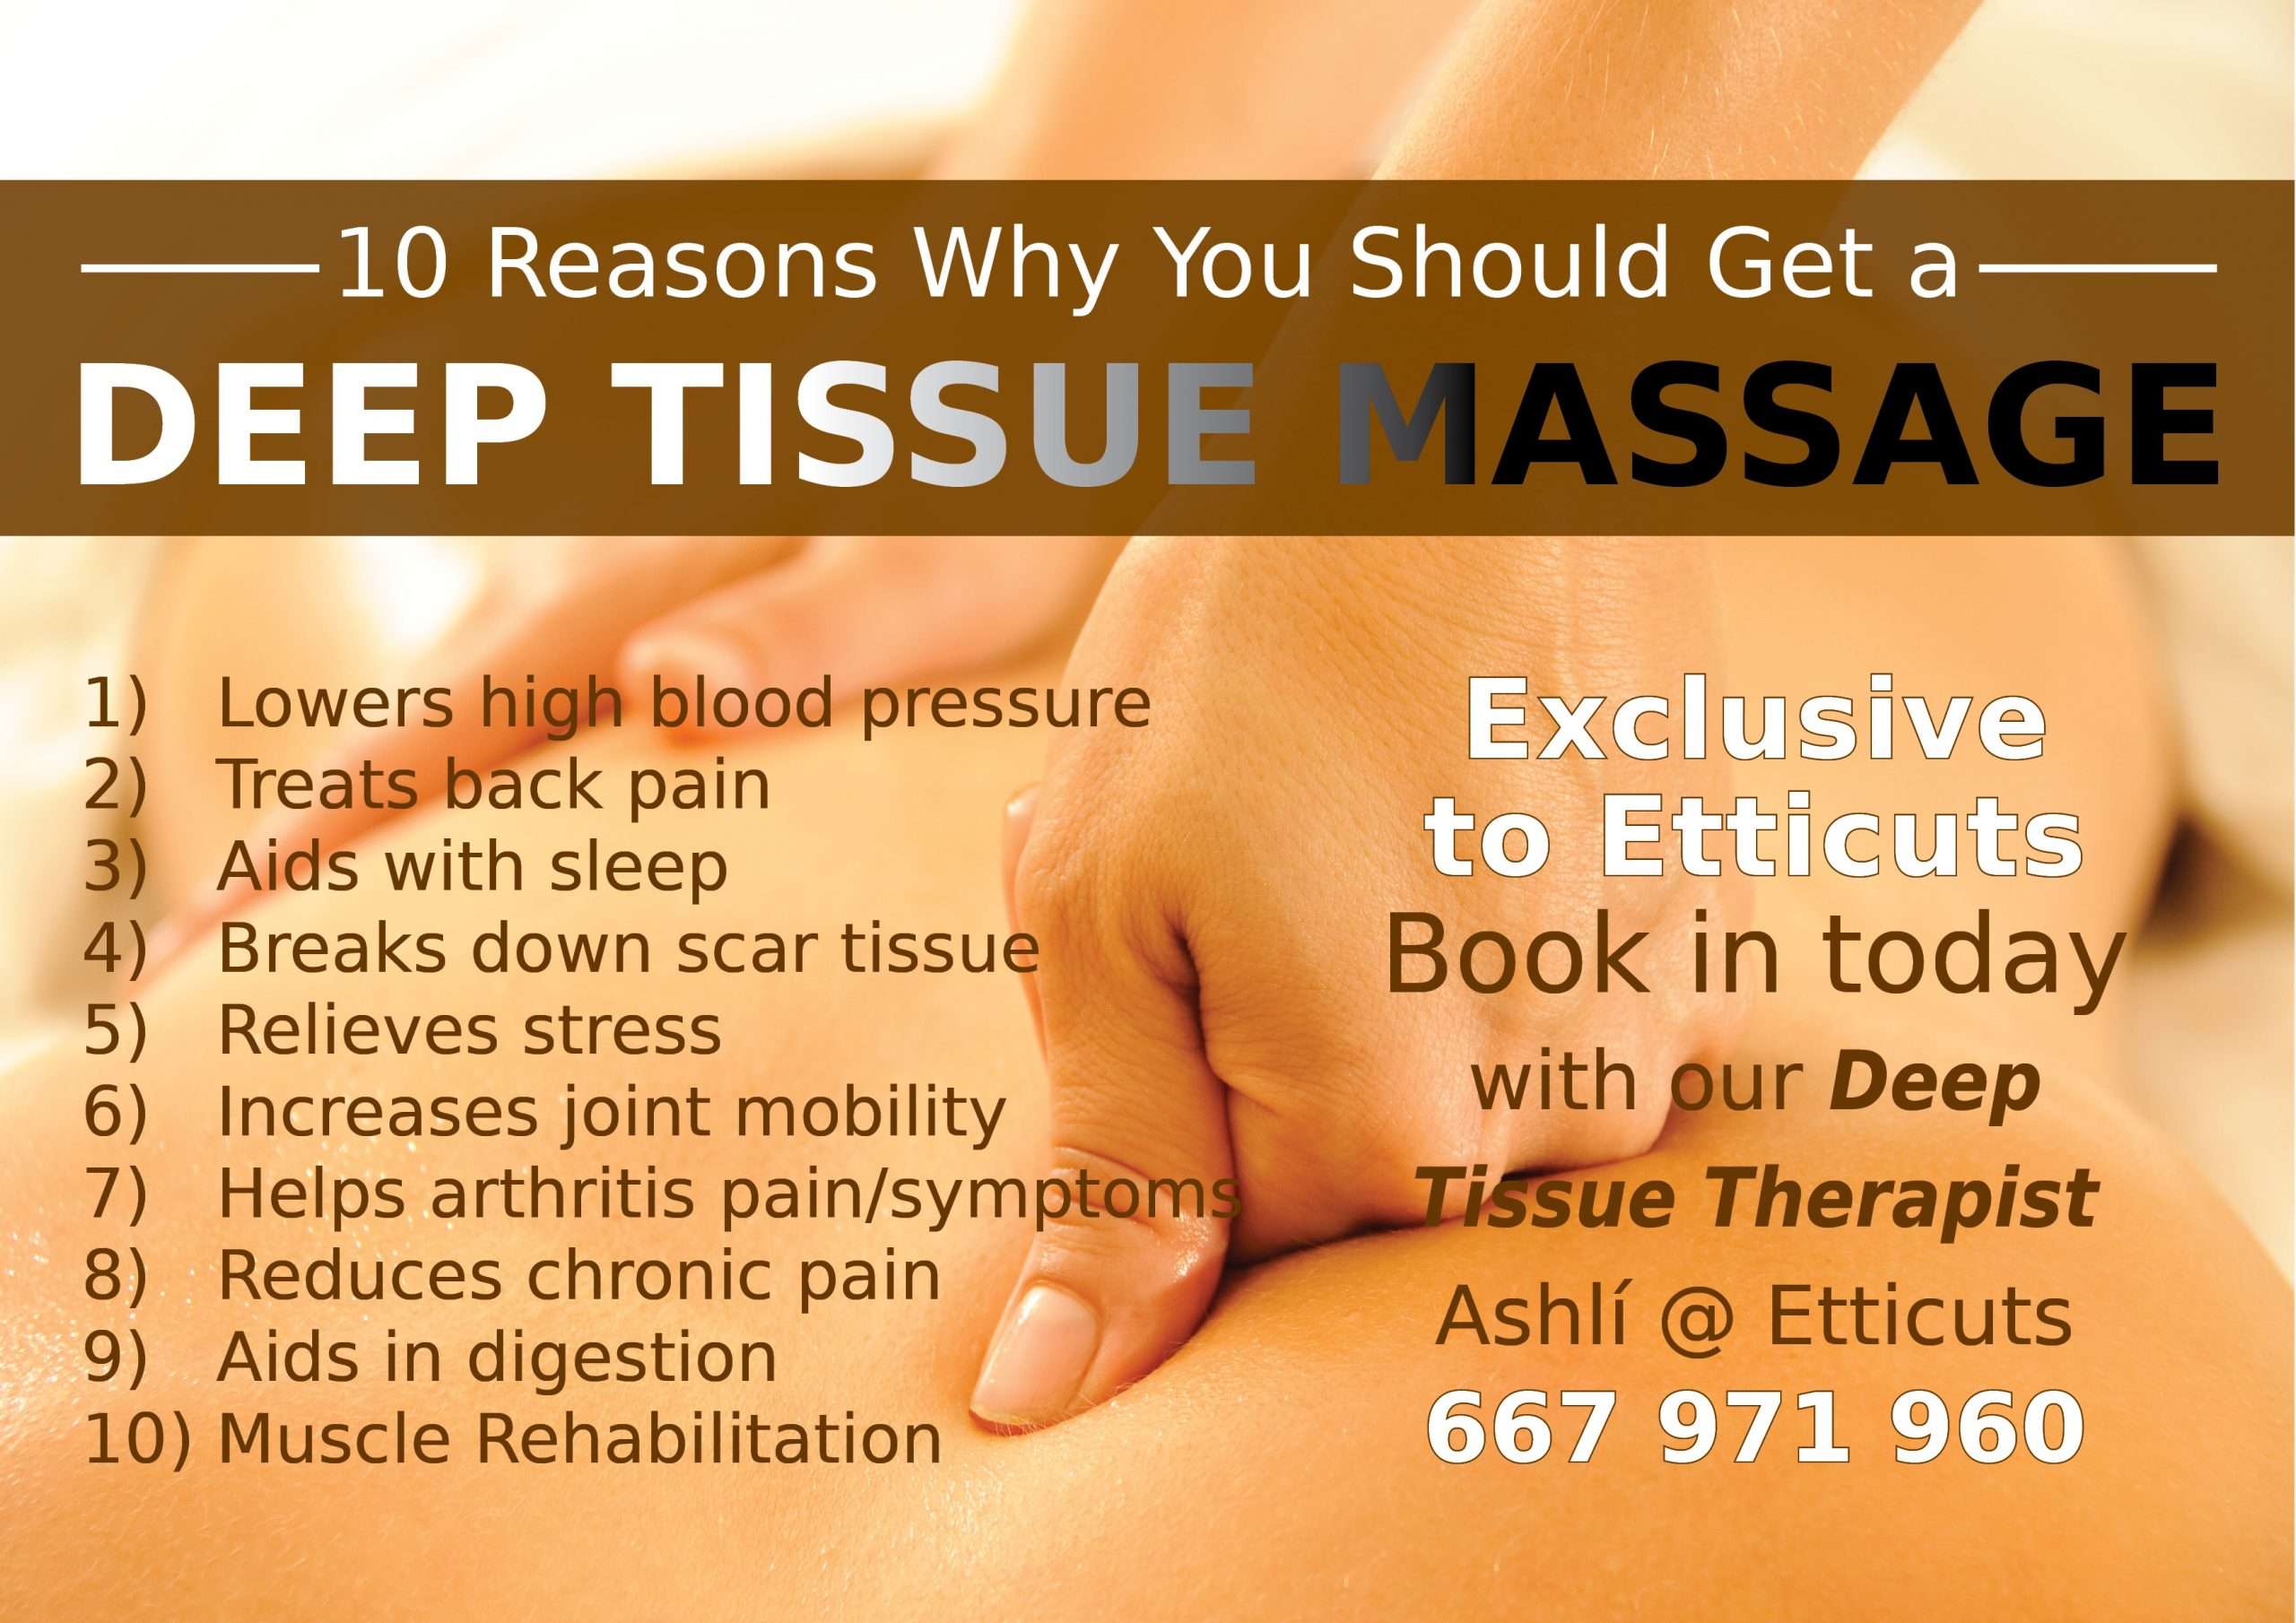 The benefits of deep tissue massage